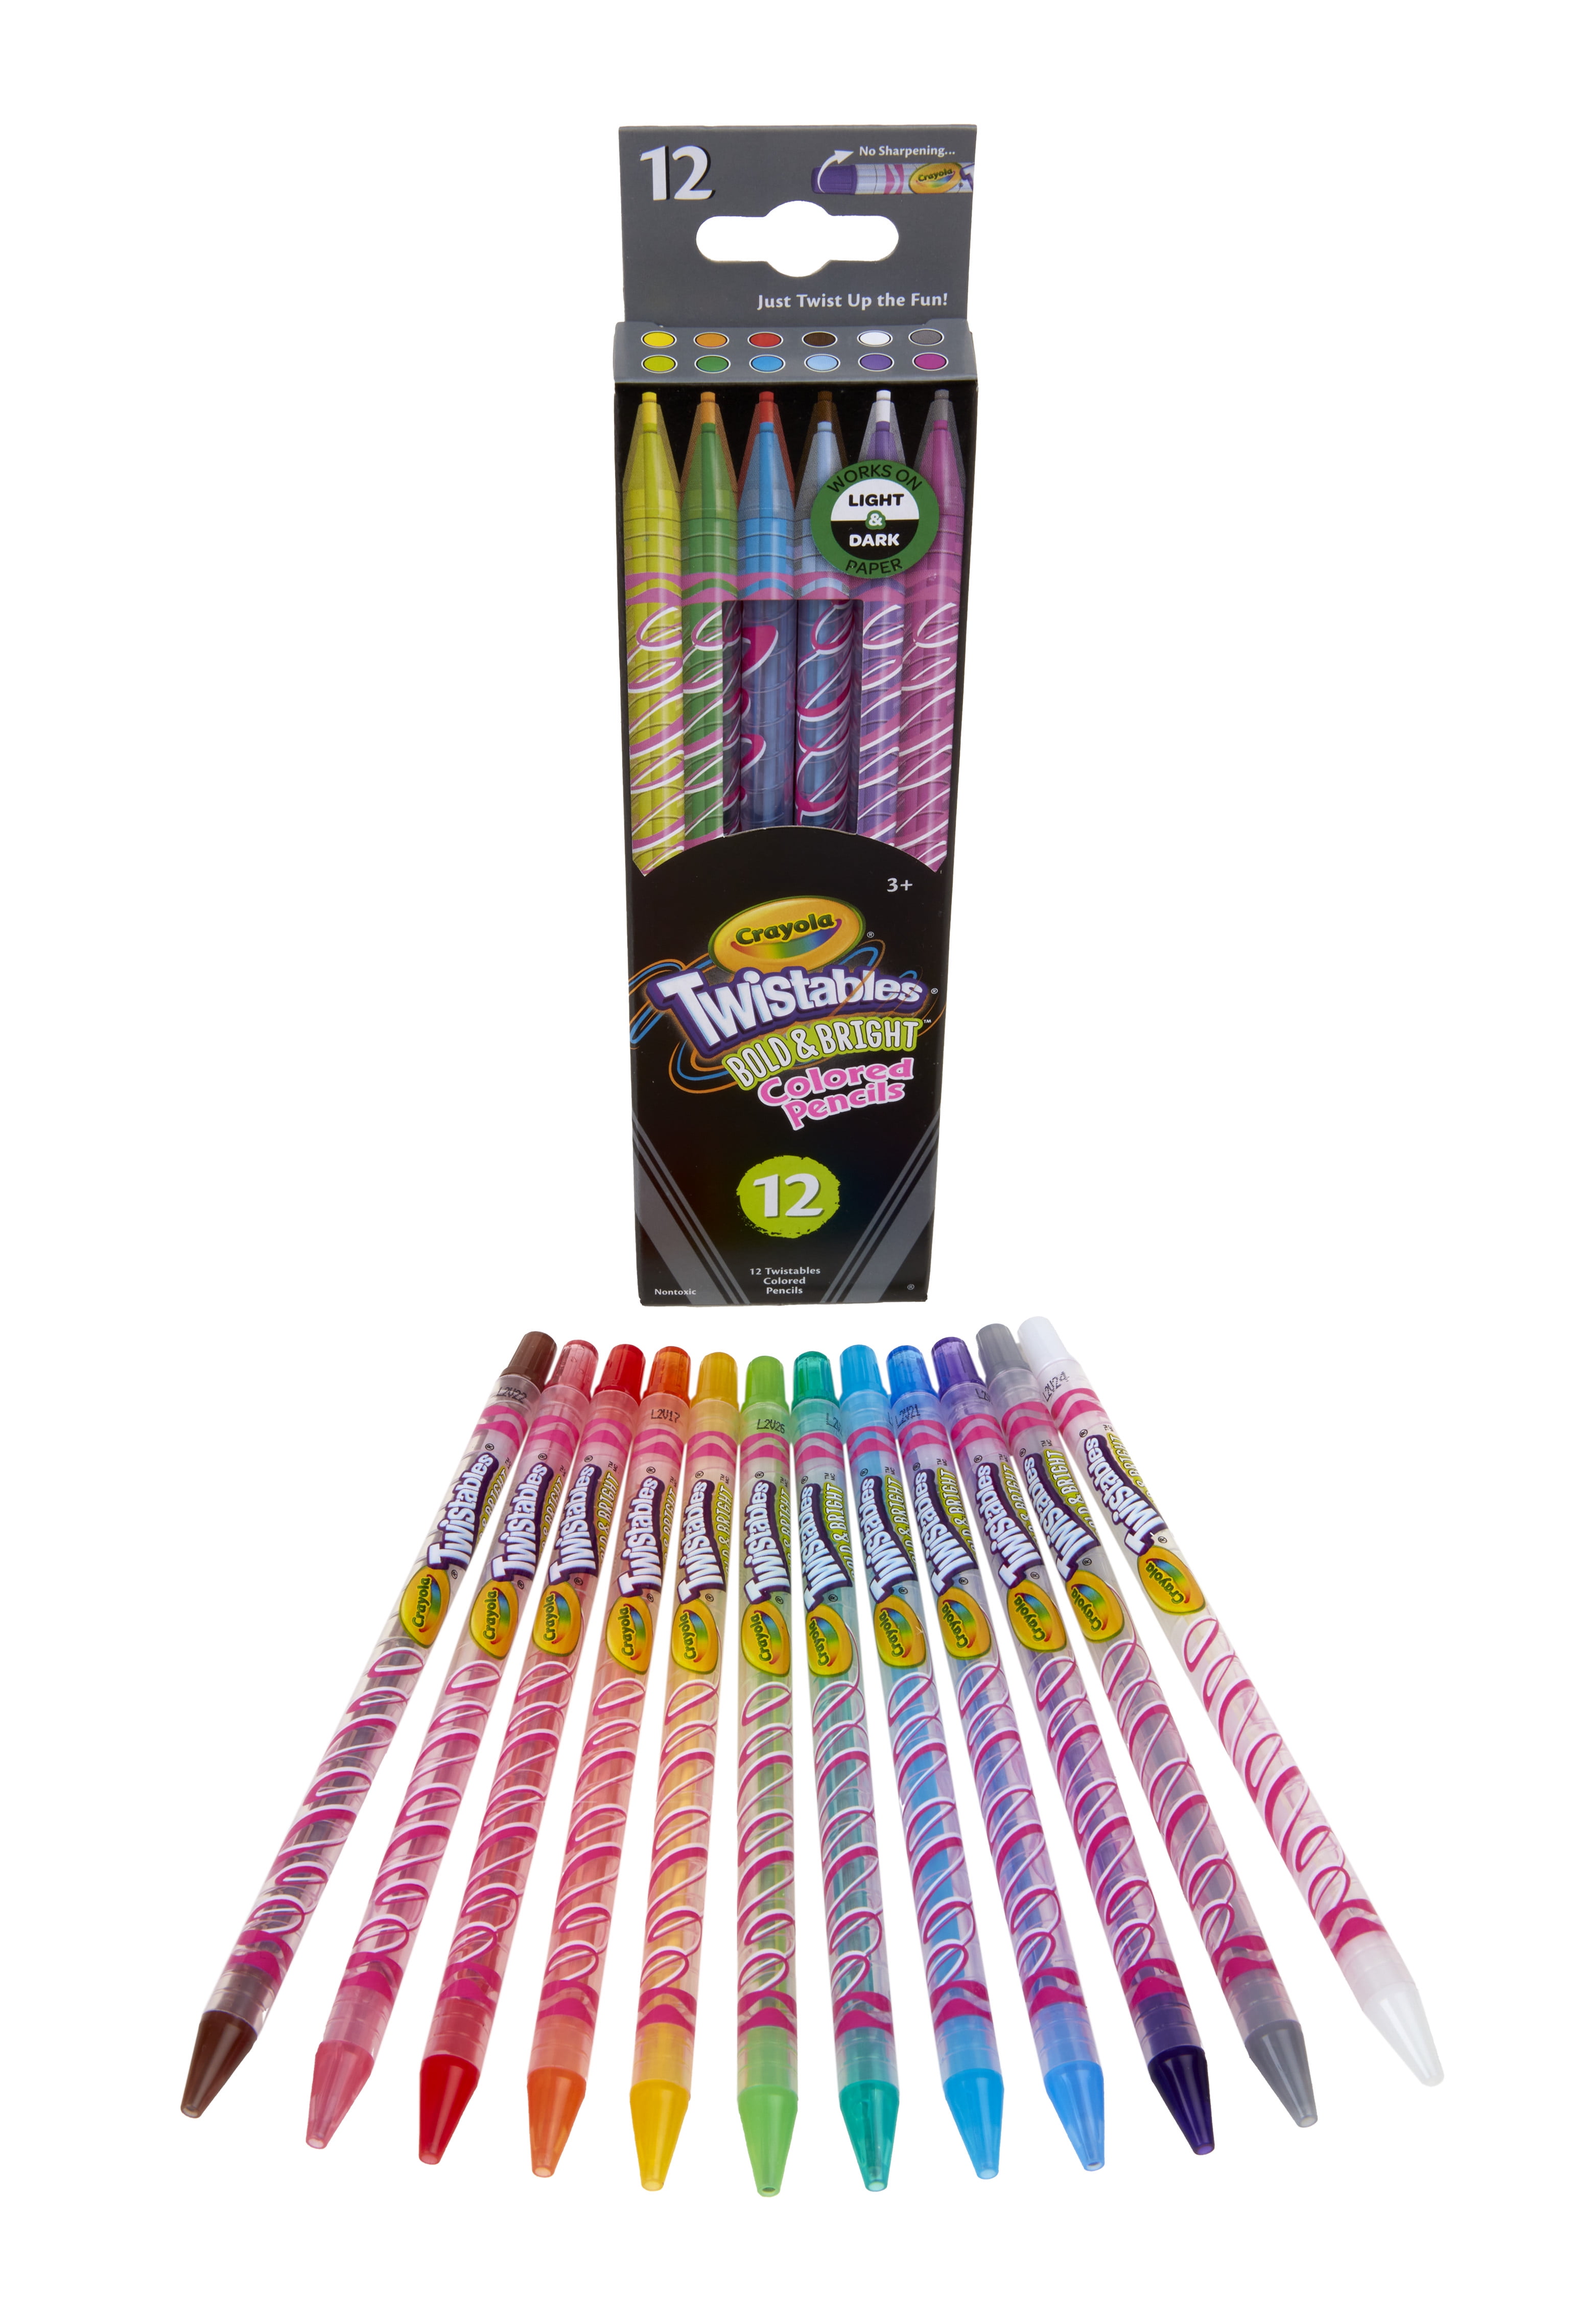 Crayola Twistables Colored Pencil Kit- - 071662952259